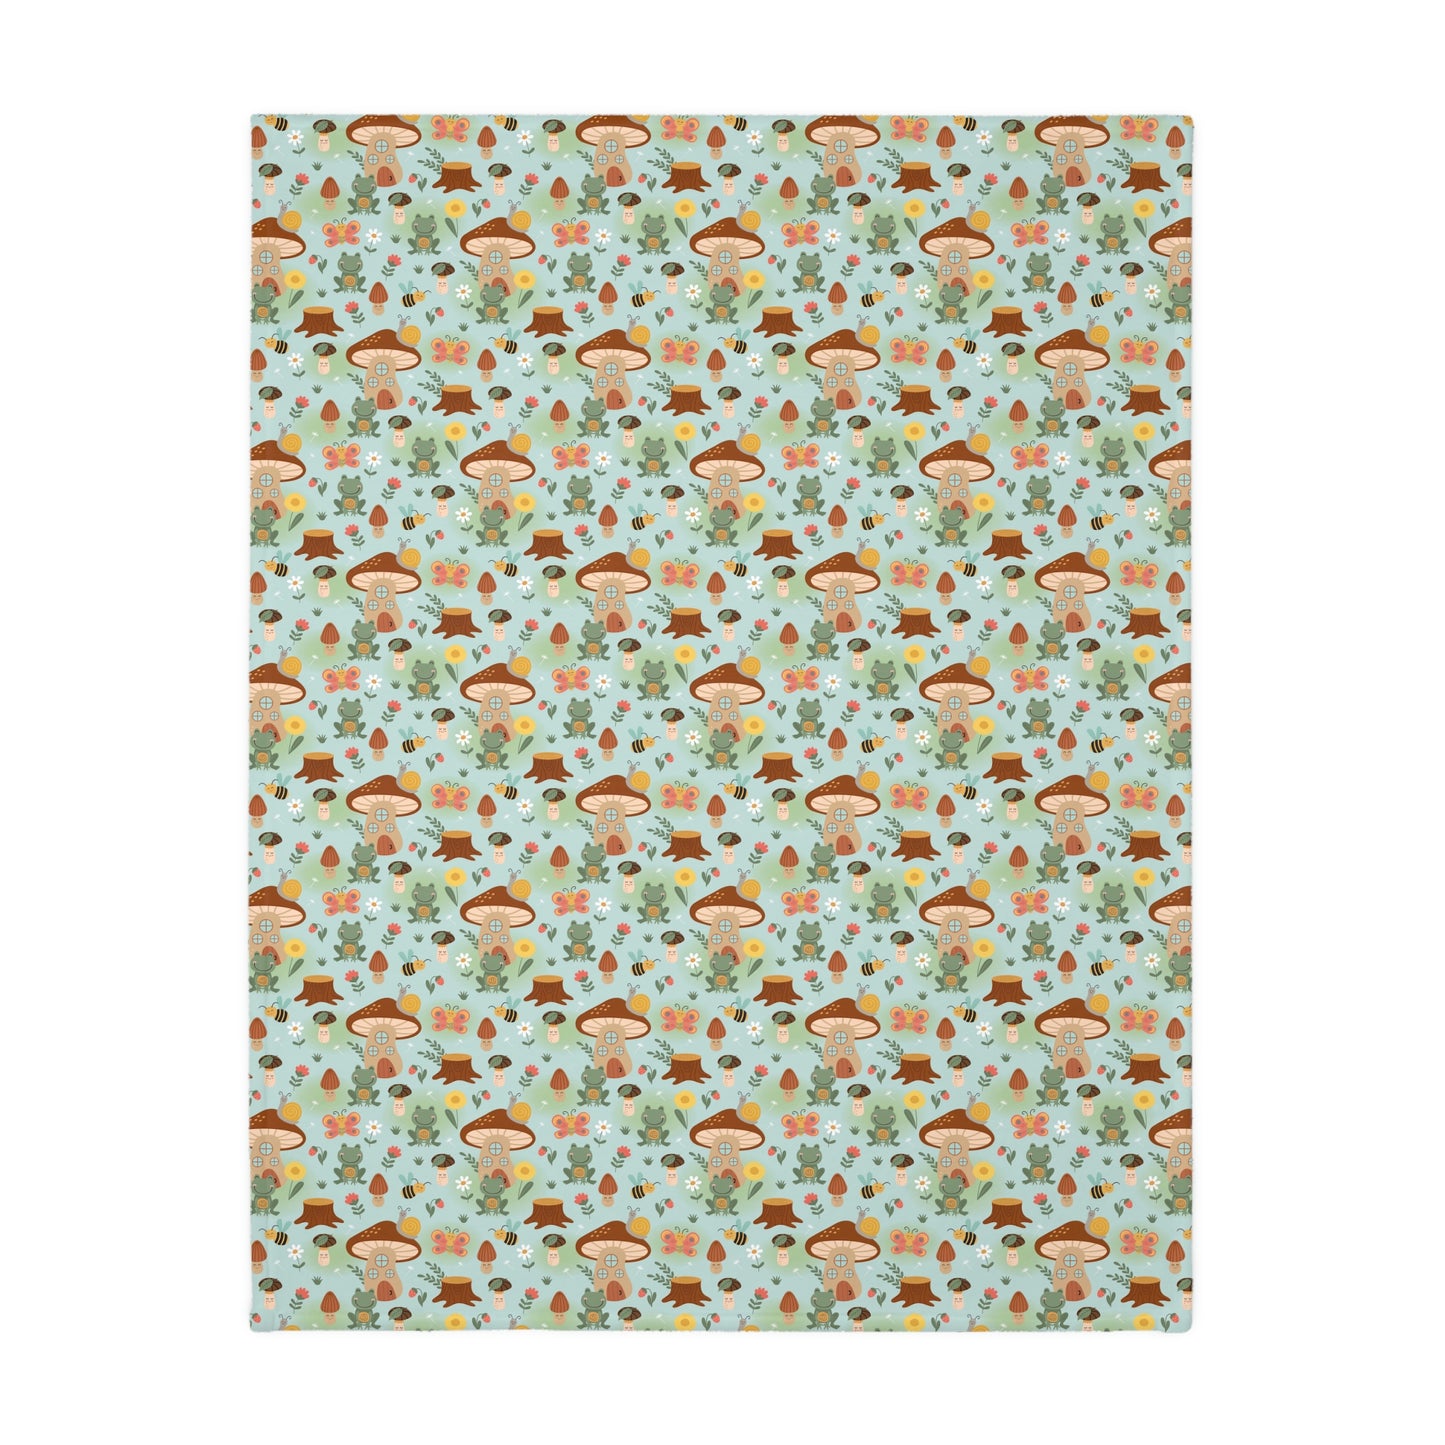 Frogs and Mushrooms Velveteen Minky Blanket (Two-sided print)